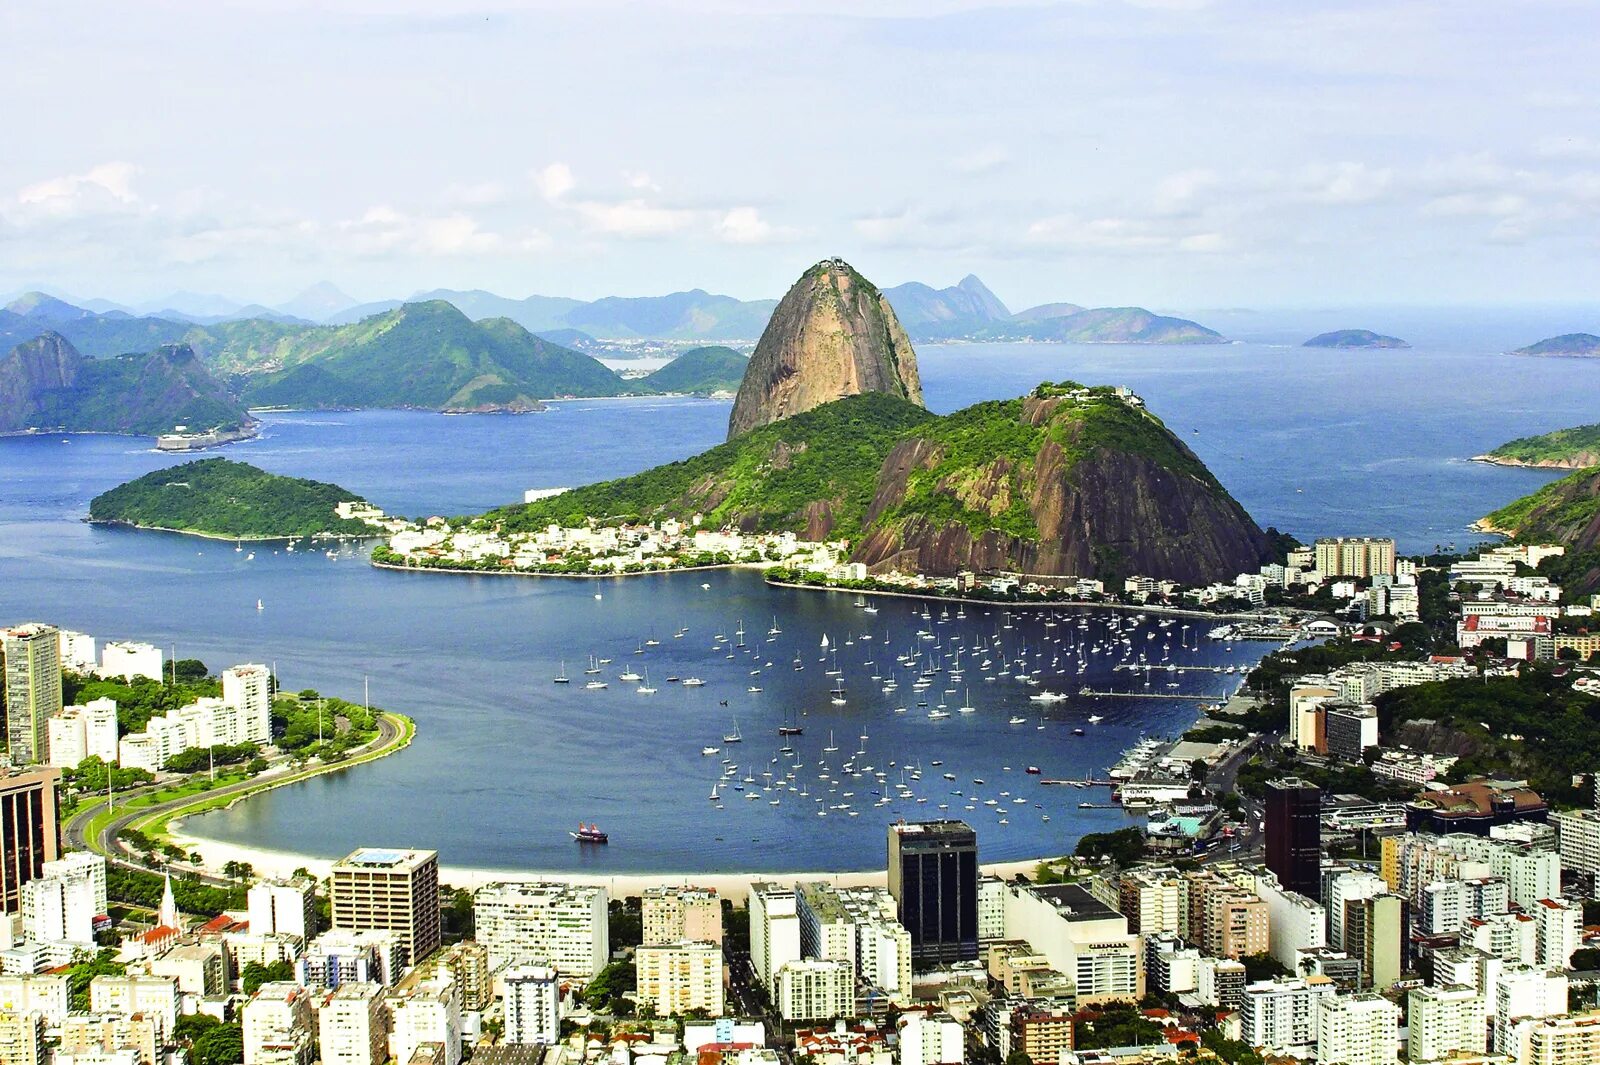 Залив Рио де Жанейро. Залив Гуанабара. Южная Америка Рио де Жанейро. Рио-де-Жанейро (город в Бразилии).